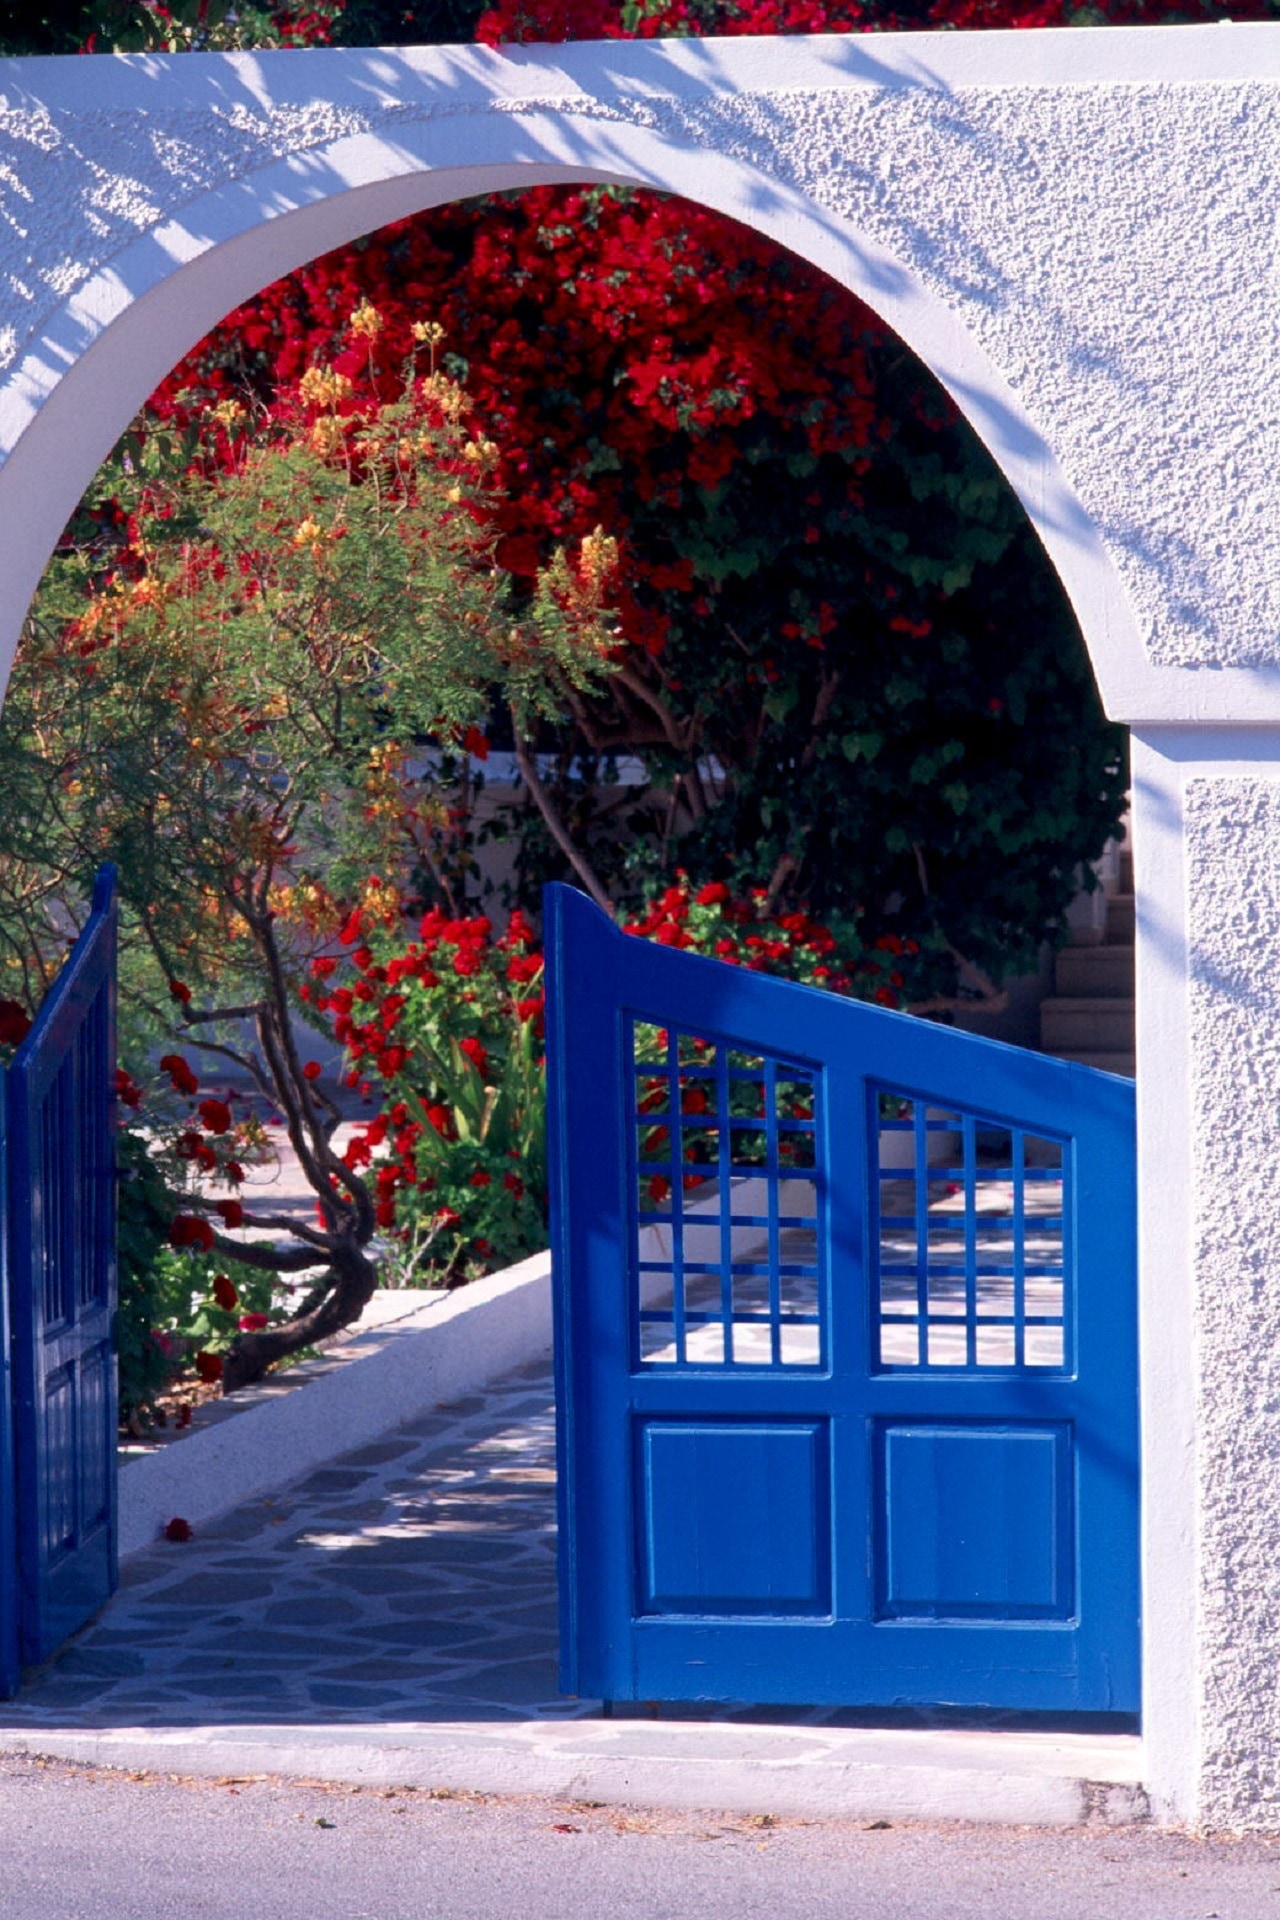 Santorini, Gate, Arch, Village, Island, outdoors, day